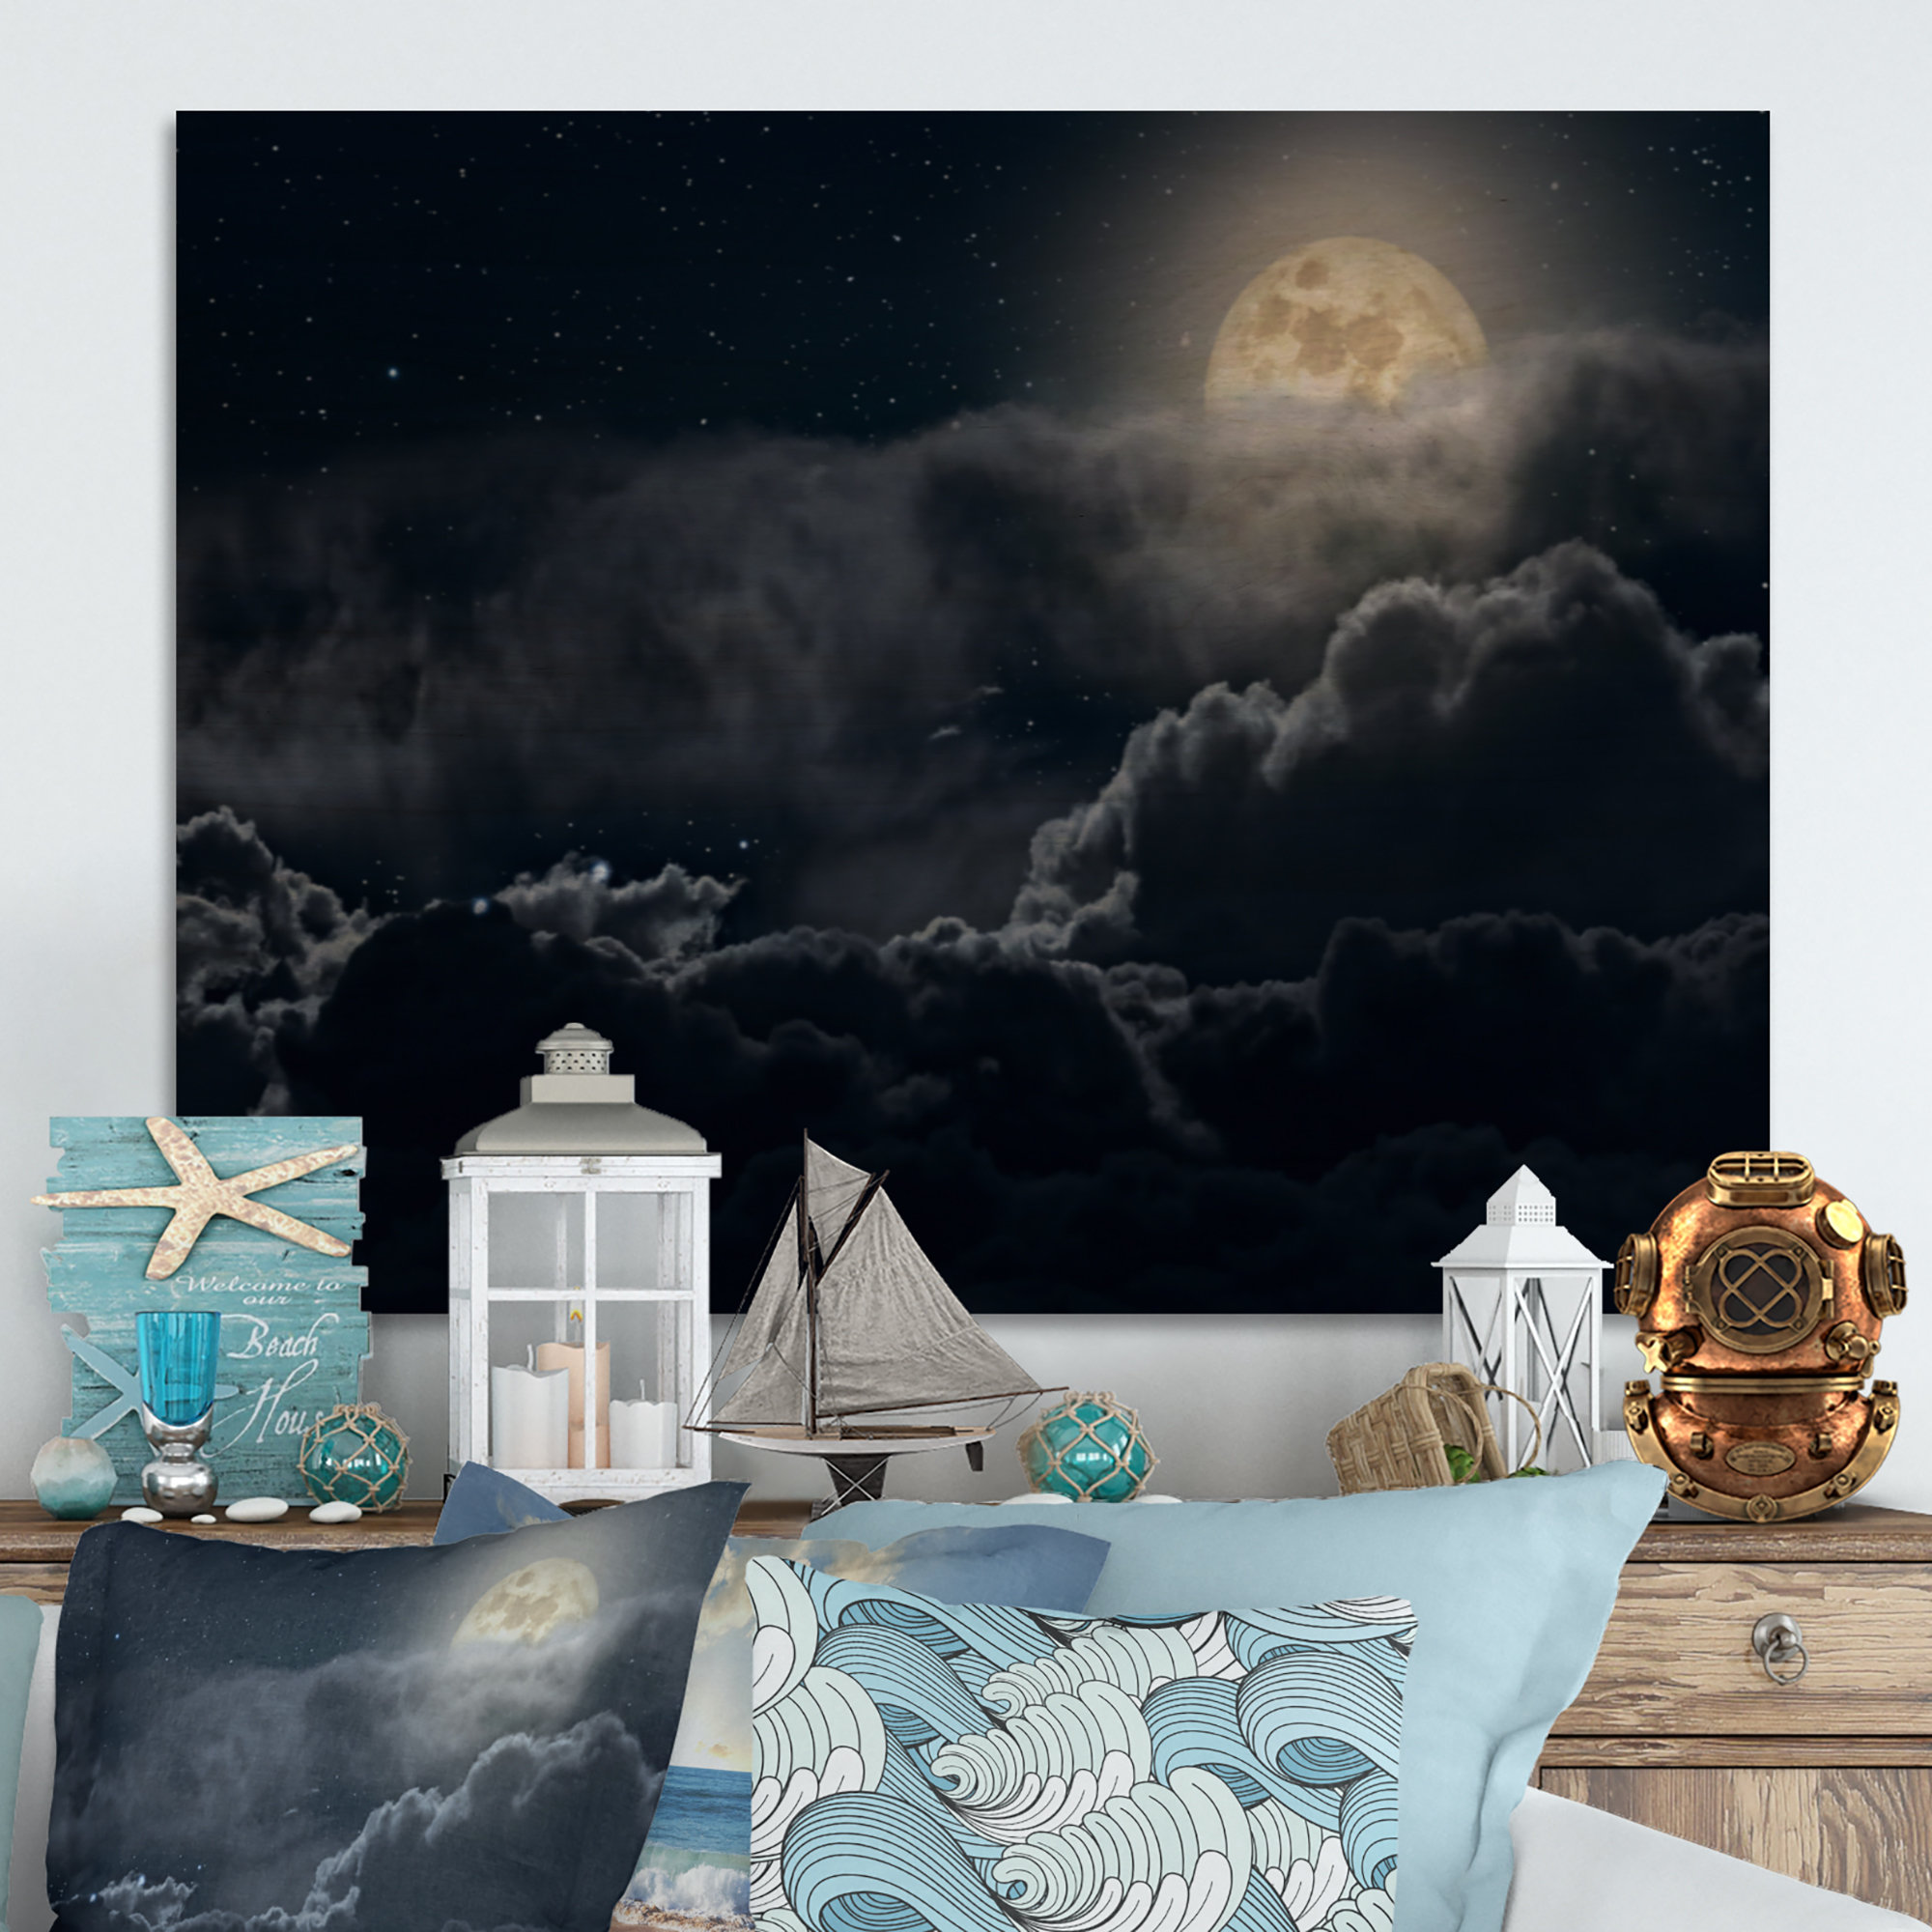 Paint Your Own Moon Lamp Kit, Halloween Gifts DIY Space Moon Night Light,  Art Supplies Arts